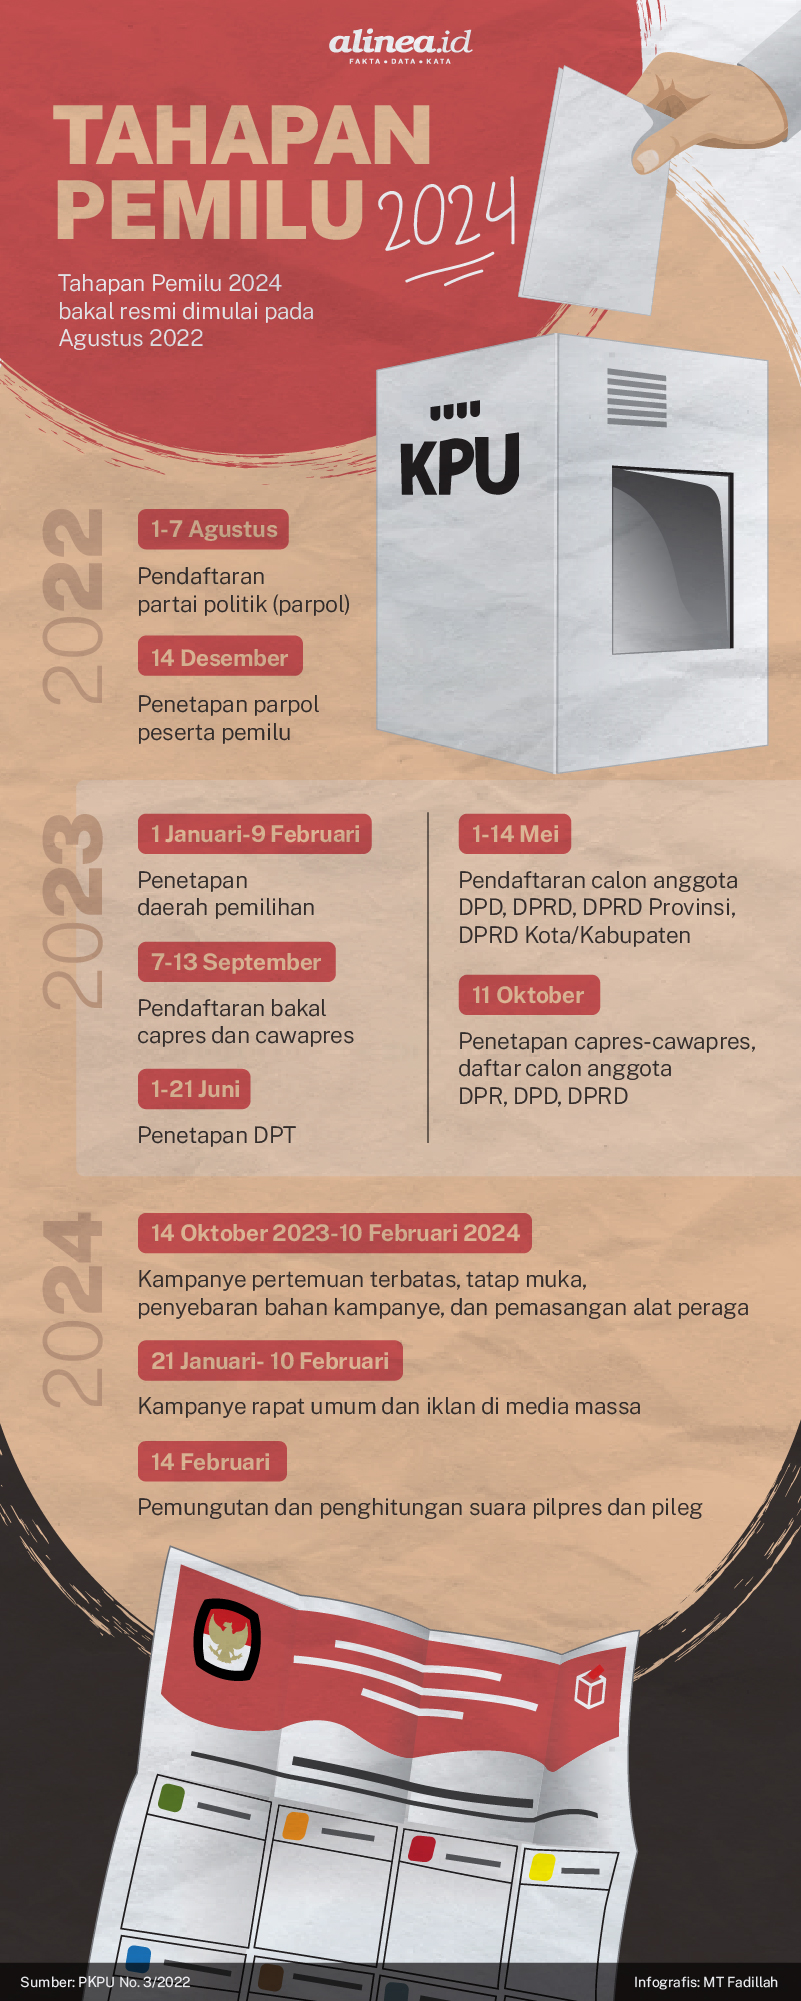 Infografik Alinea.id/MT Fadillah